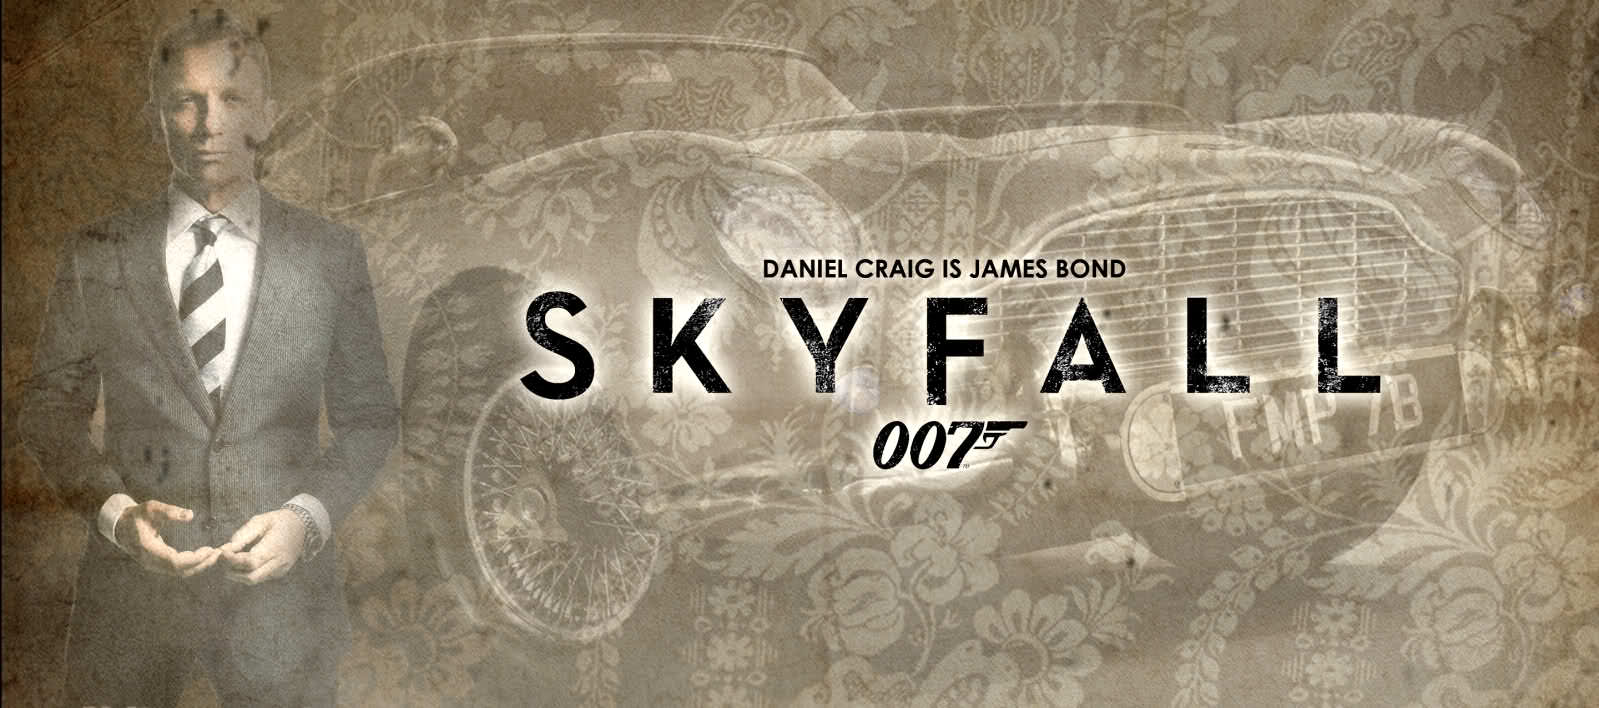 James Bond Skyfall 007 Wallpaper [2012]